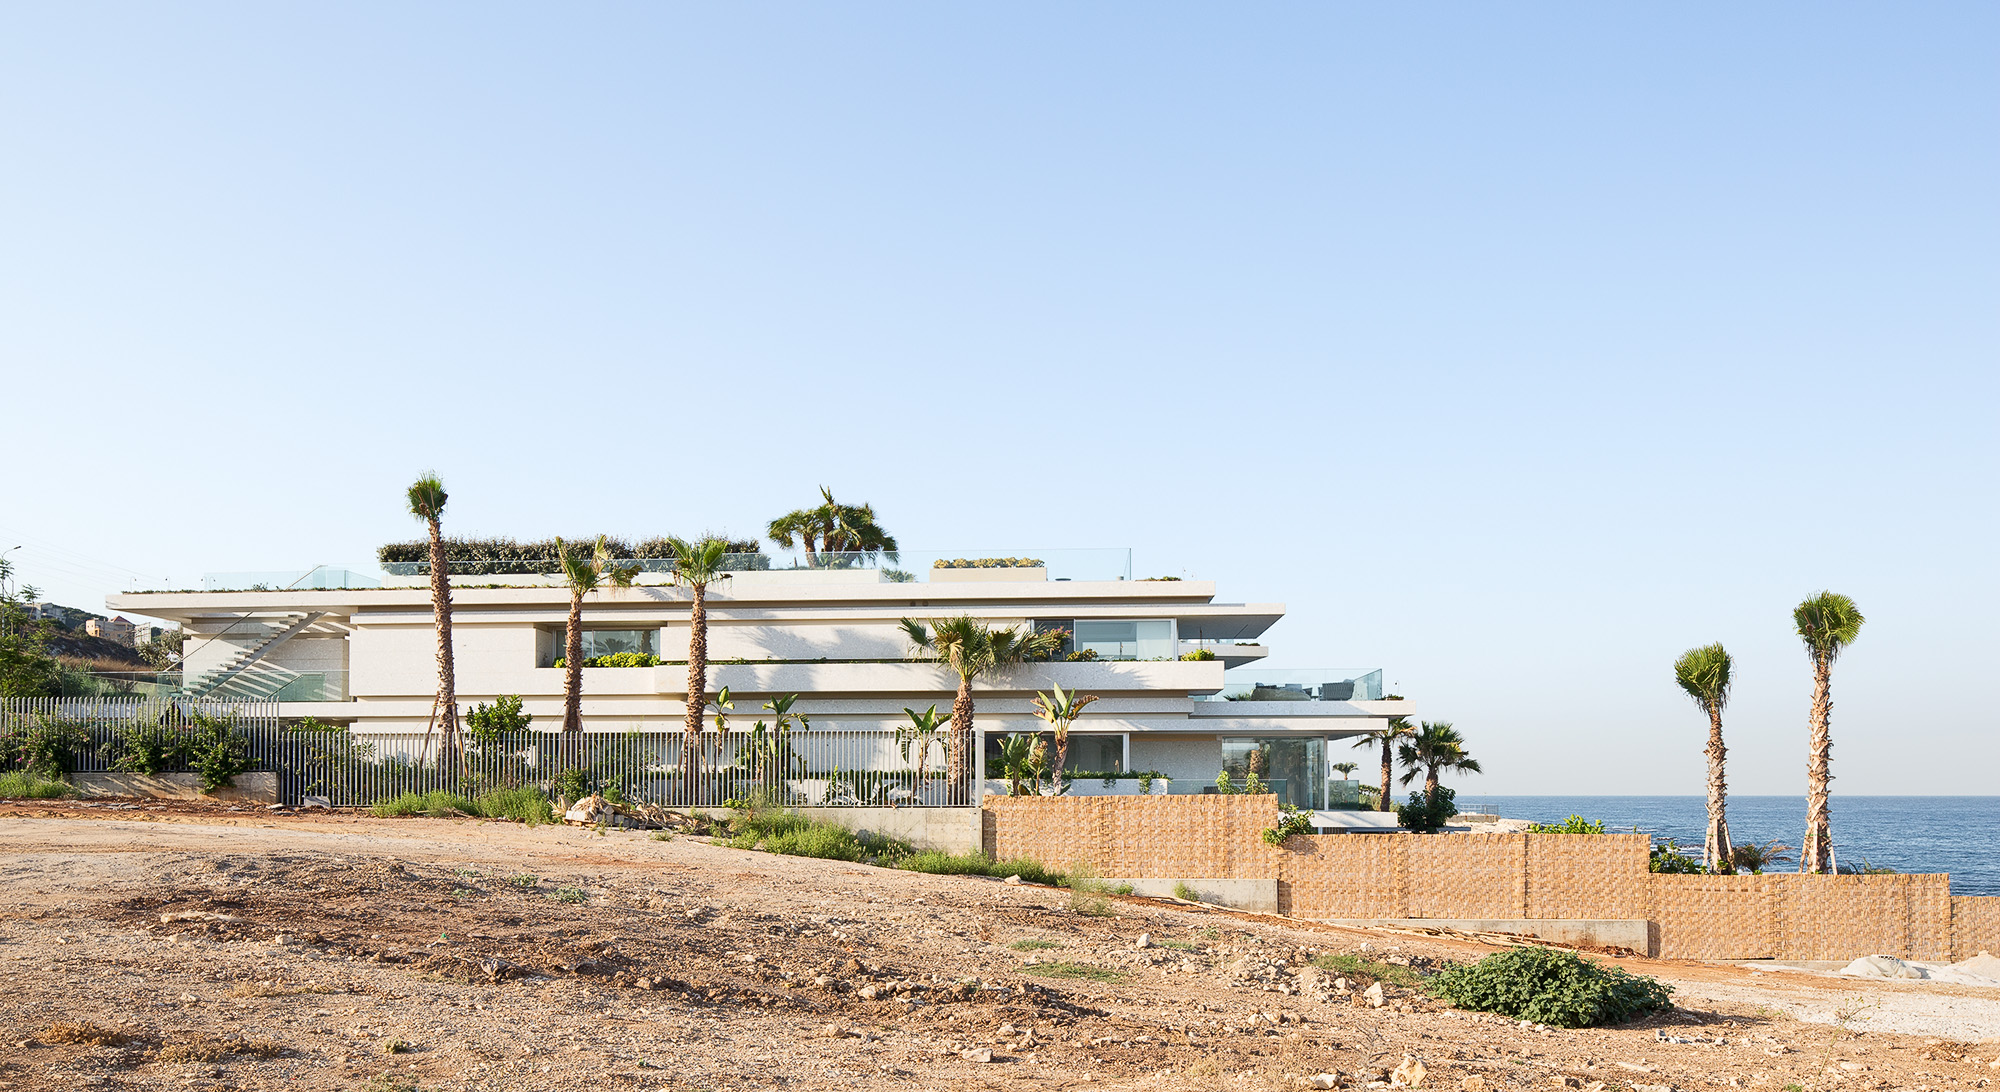  Villa Kali - Karim Nader Studio and Blankpage Architects 